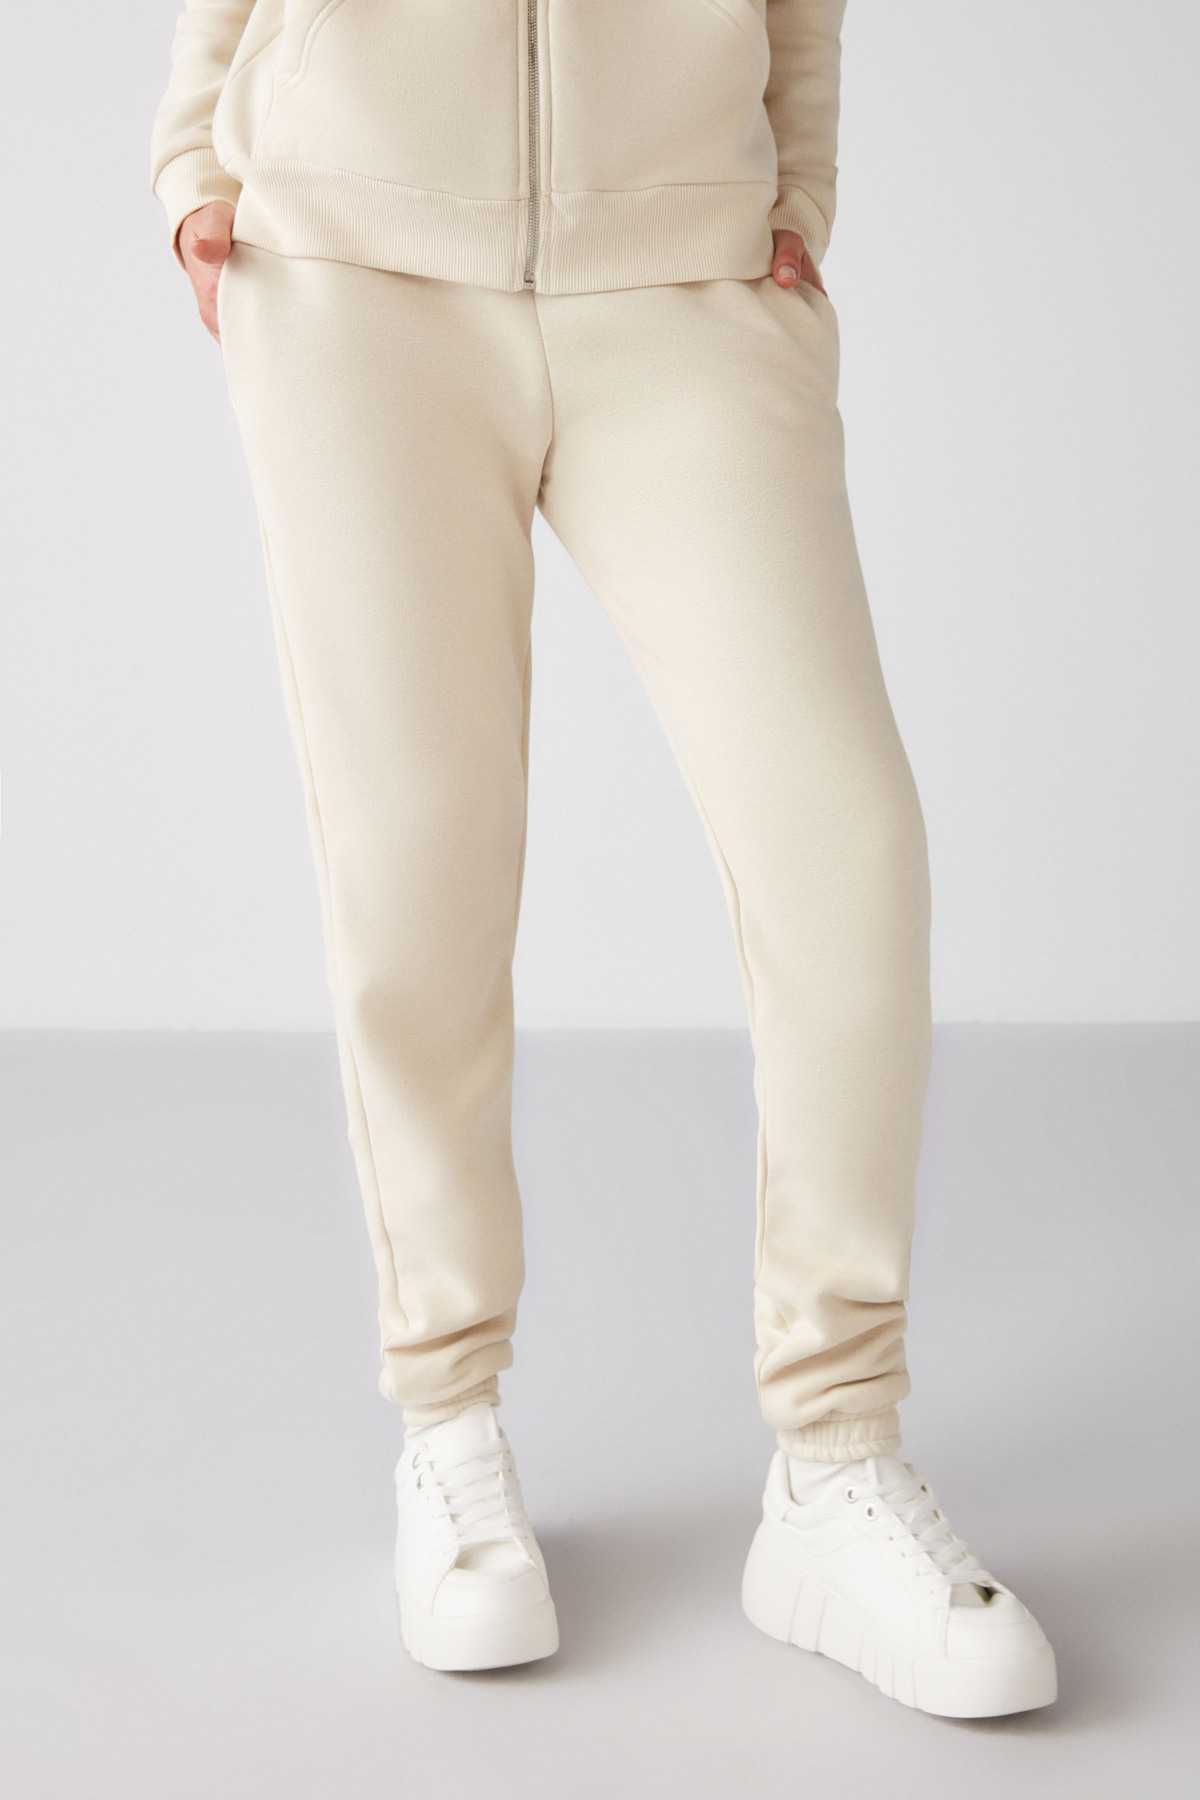 GRIMELANGE Maritza Women's Regular Fit Elastic Waist And Cuff Fleece Inner Vanilla Sweatpant